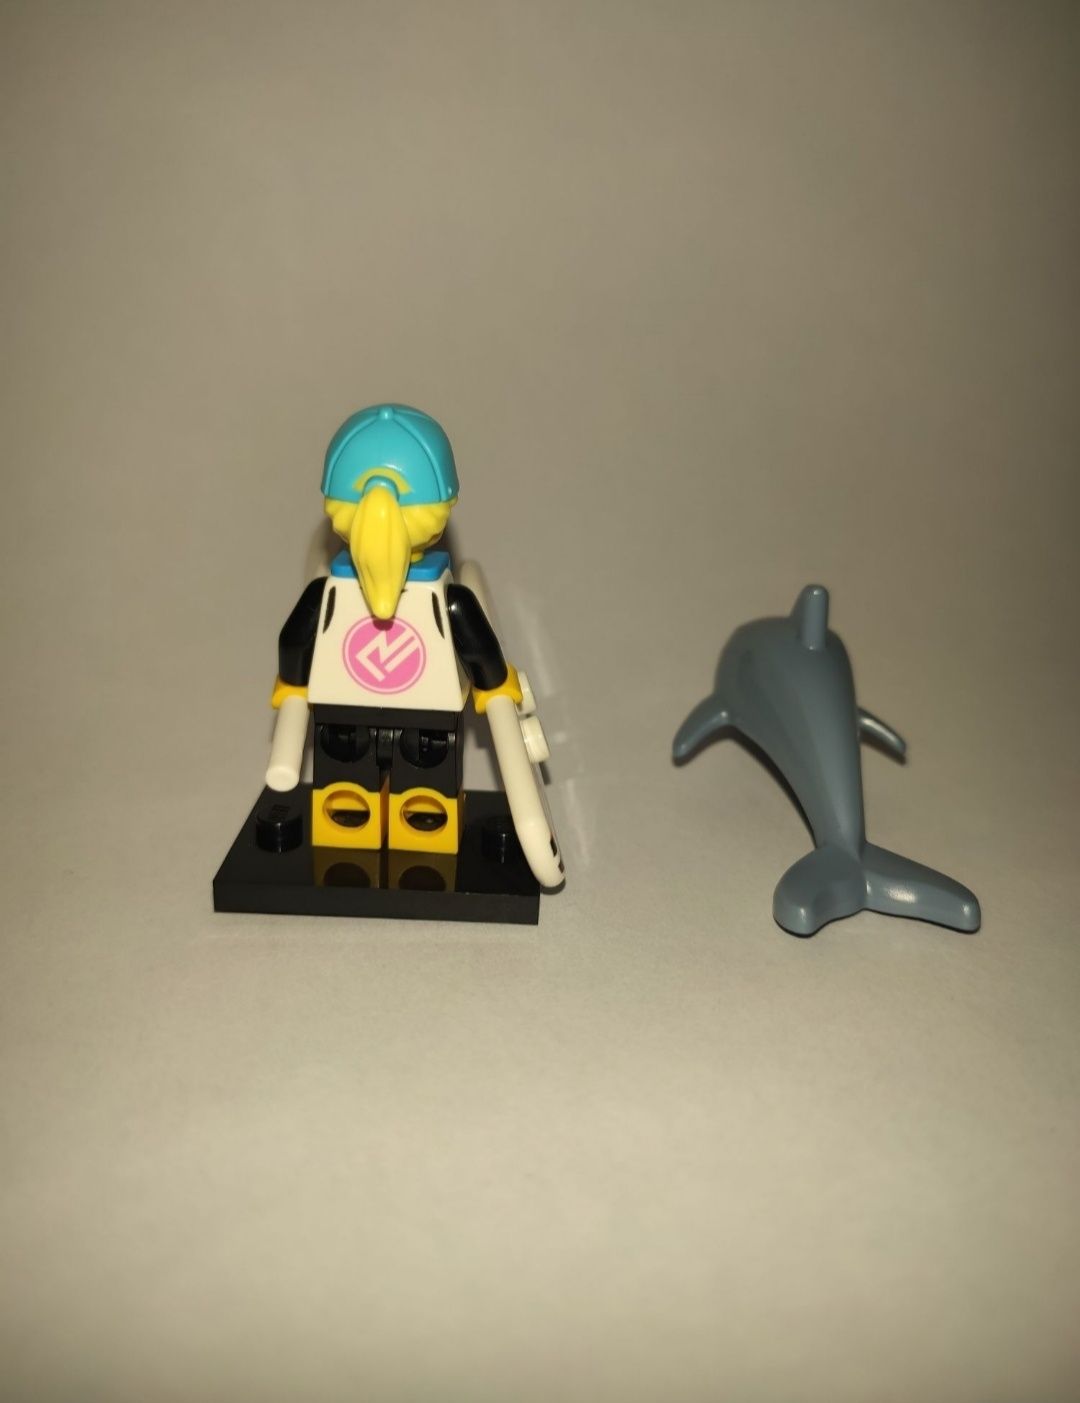 Nowa Saszetka Lego Figurka Paddle Surfer col21-1 Ludzik Series 21